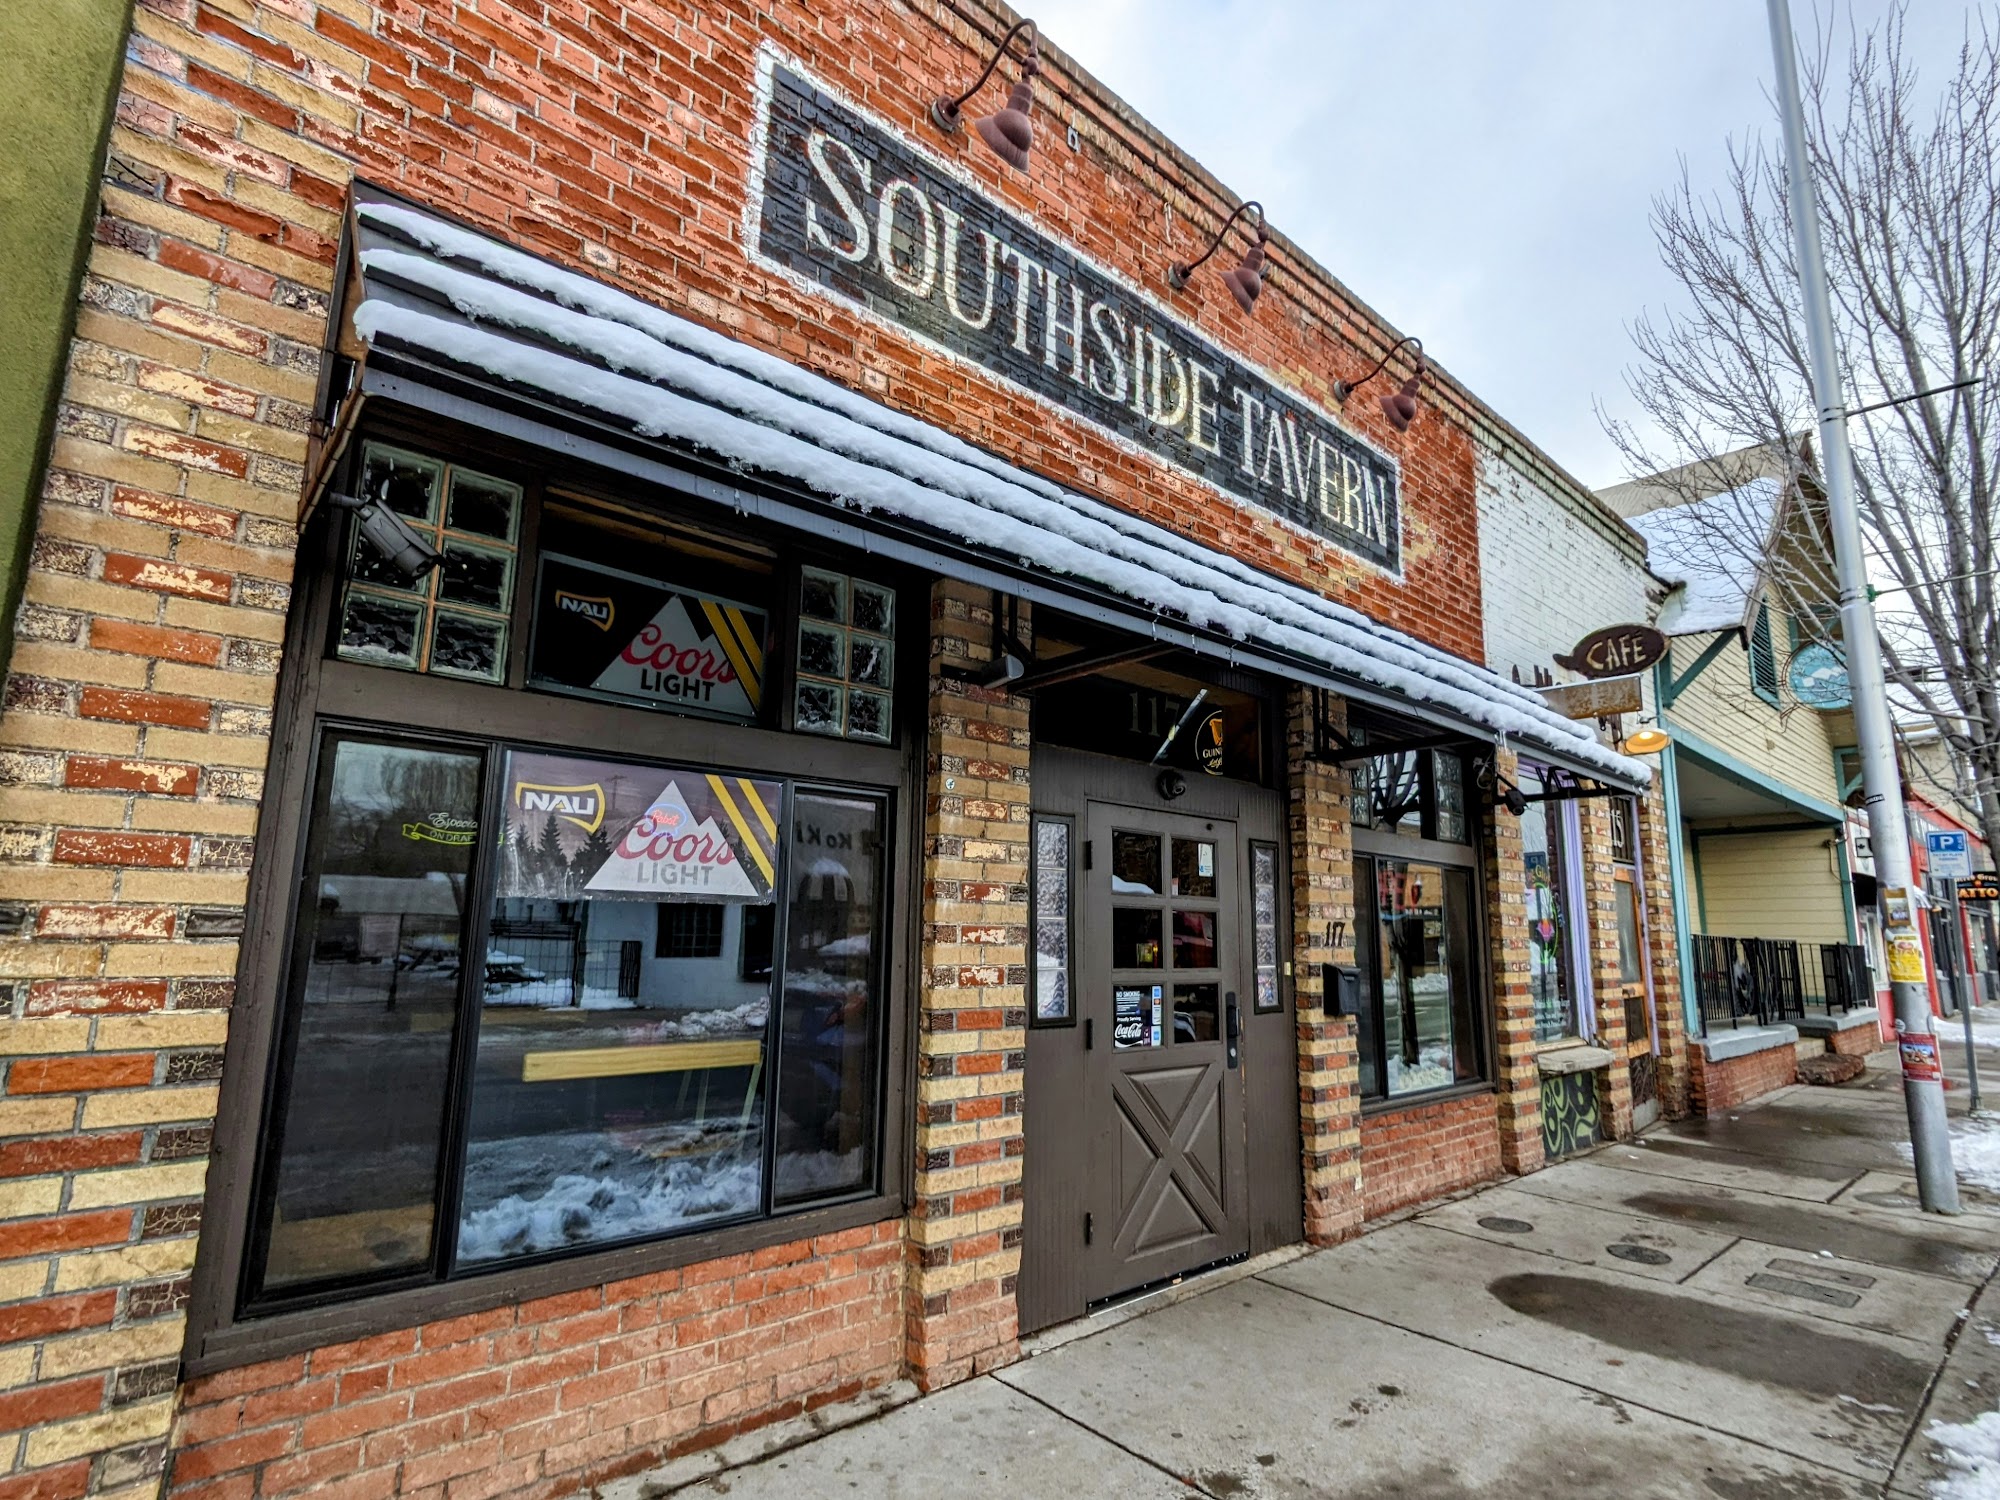 SouthSide Tavern